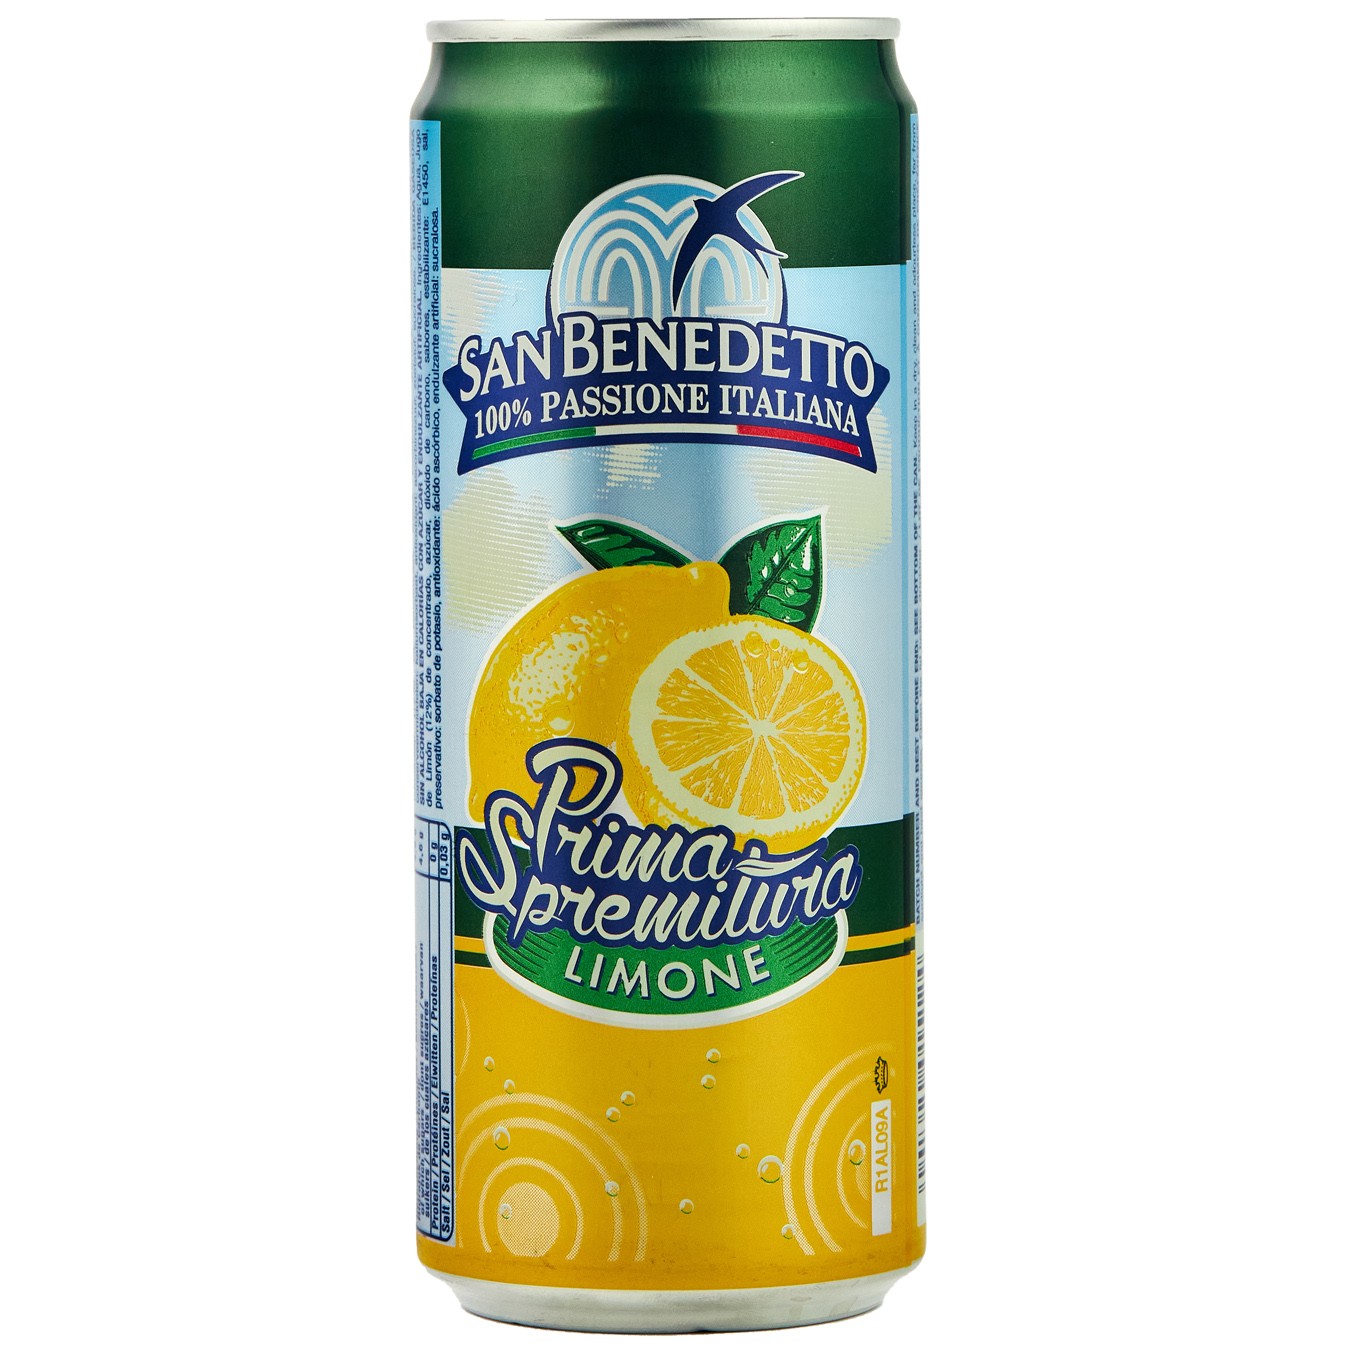 San benedetto carbonated lemon beverage 330ml
